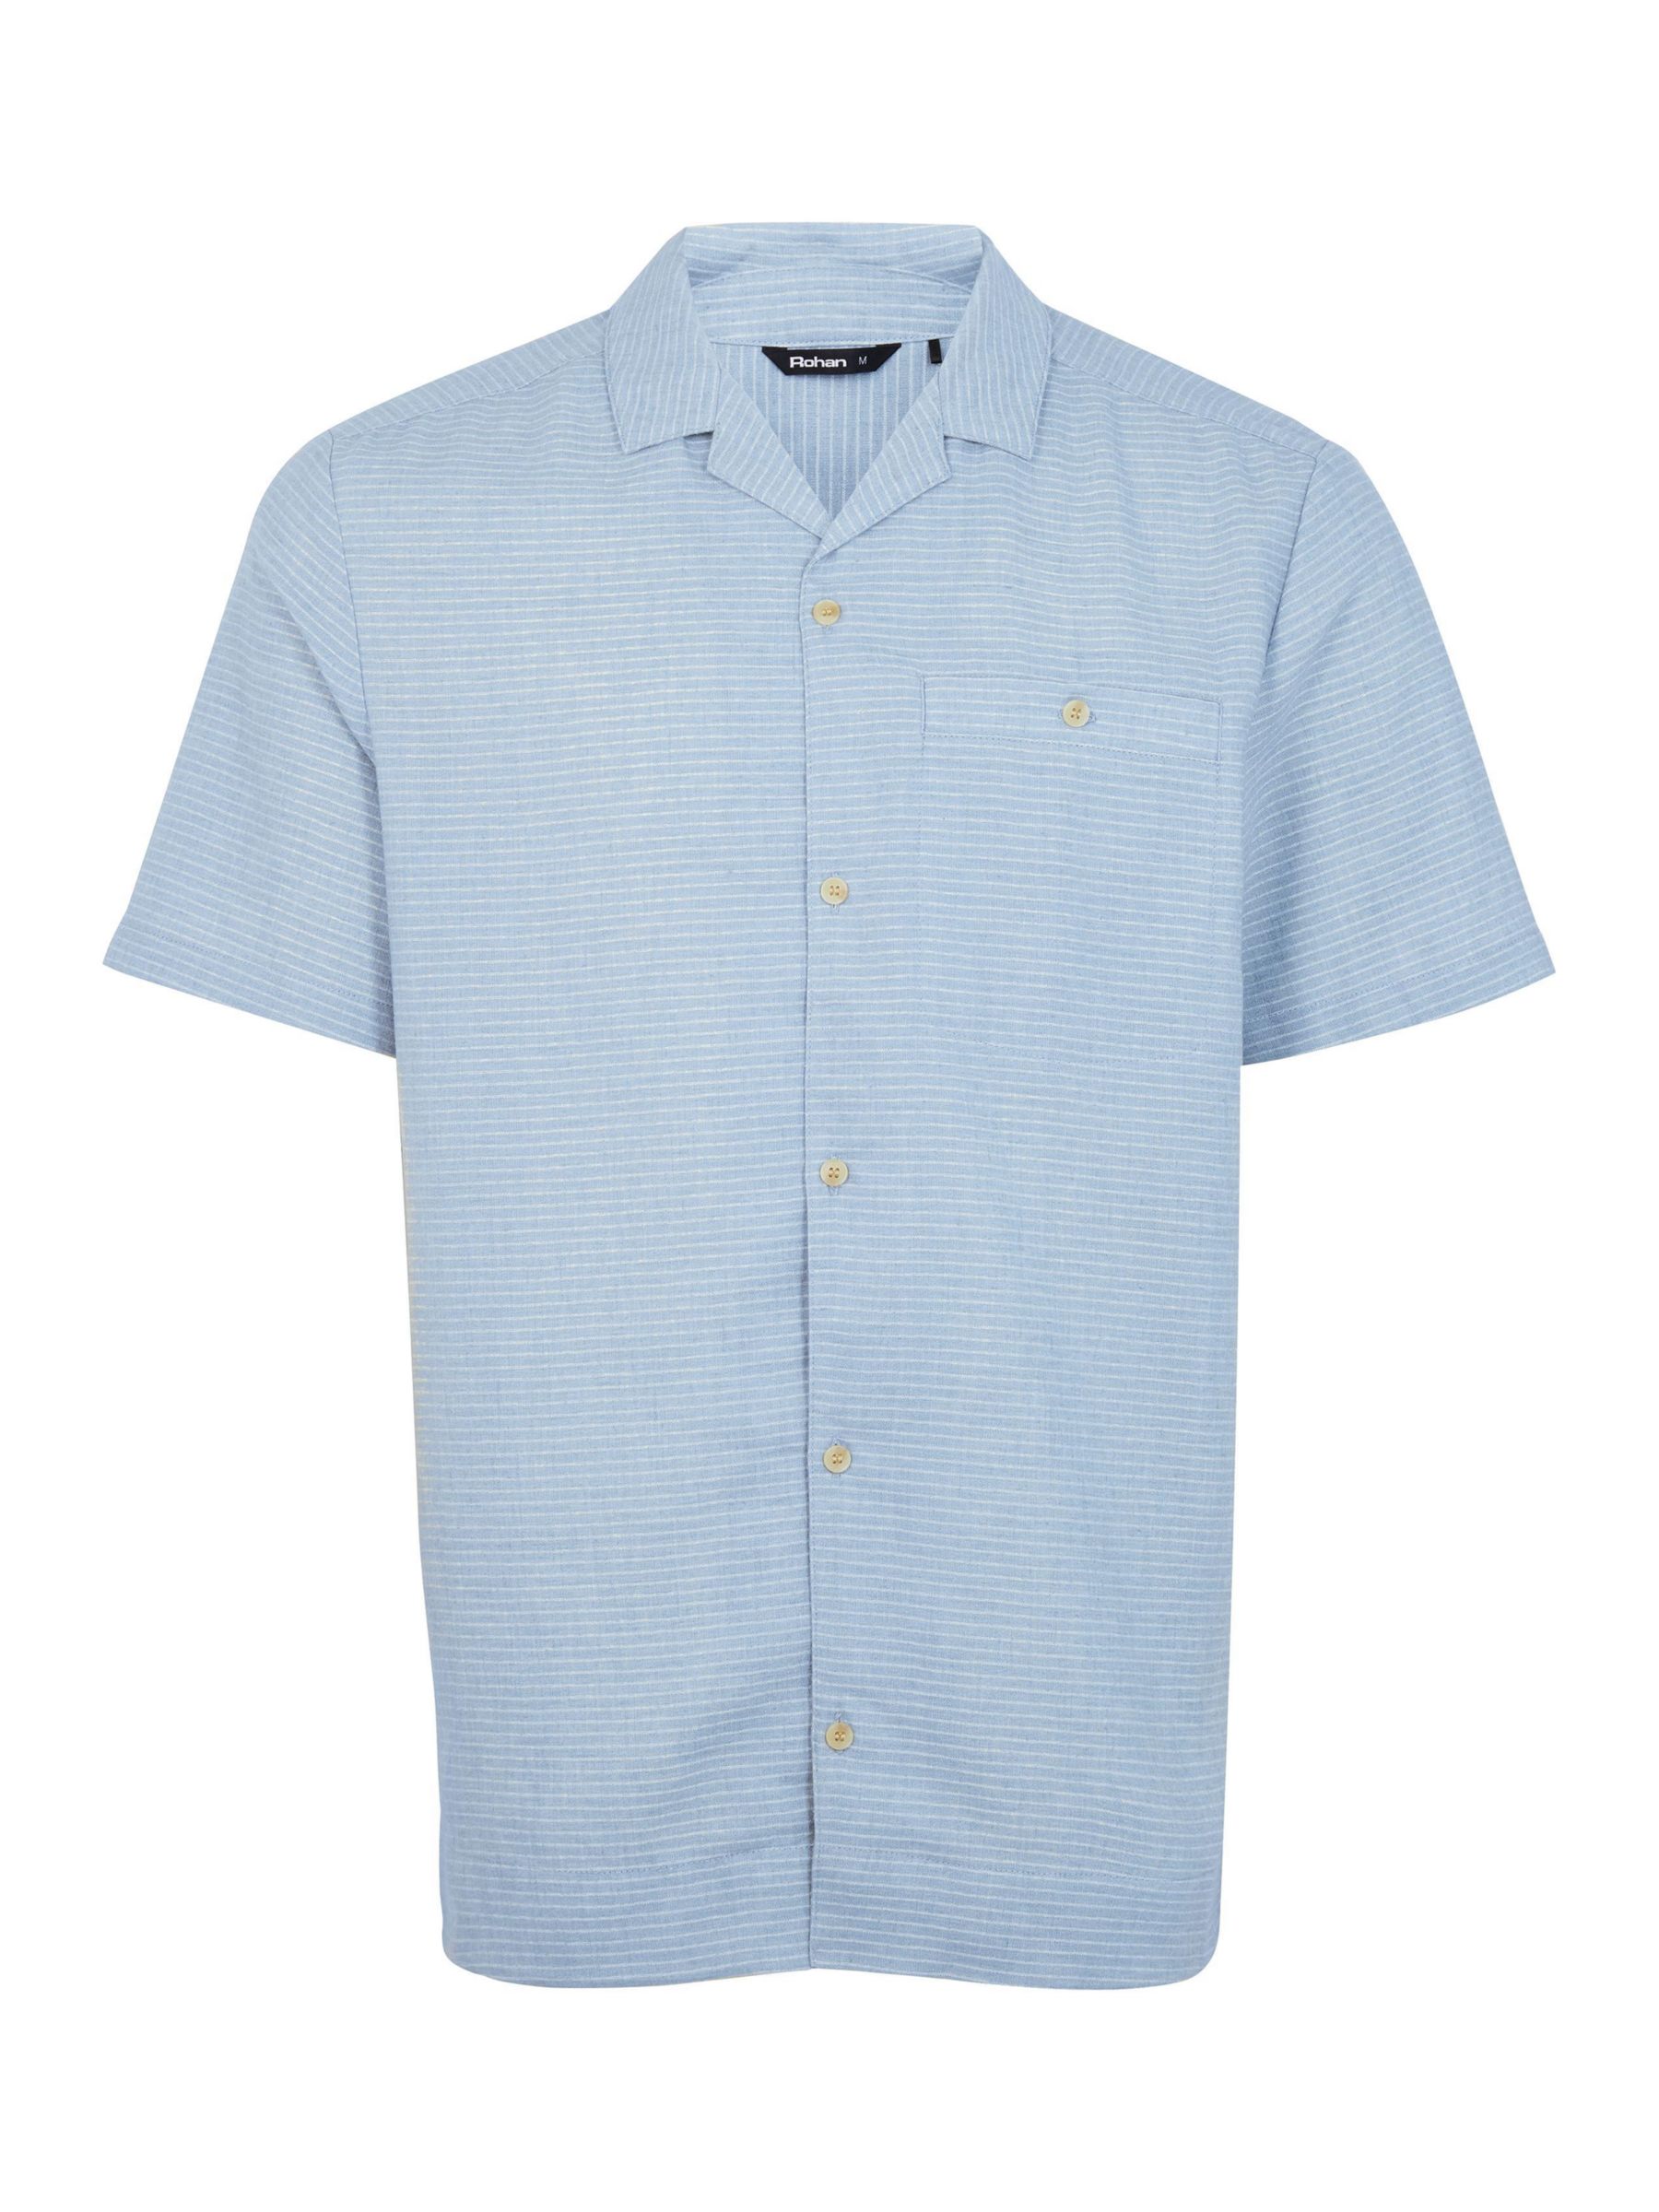 Rohan Porto Linen Blend Short Sleeve Shirt, Chambray Blue Stripe, M